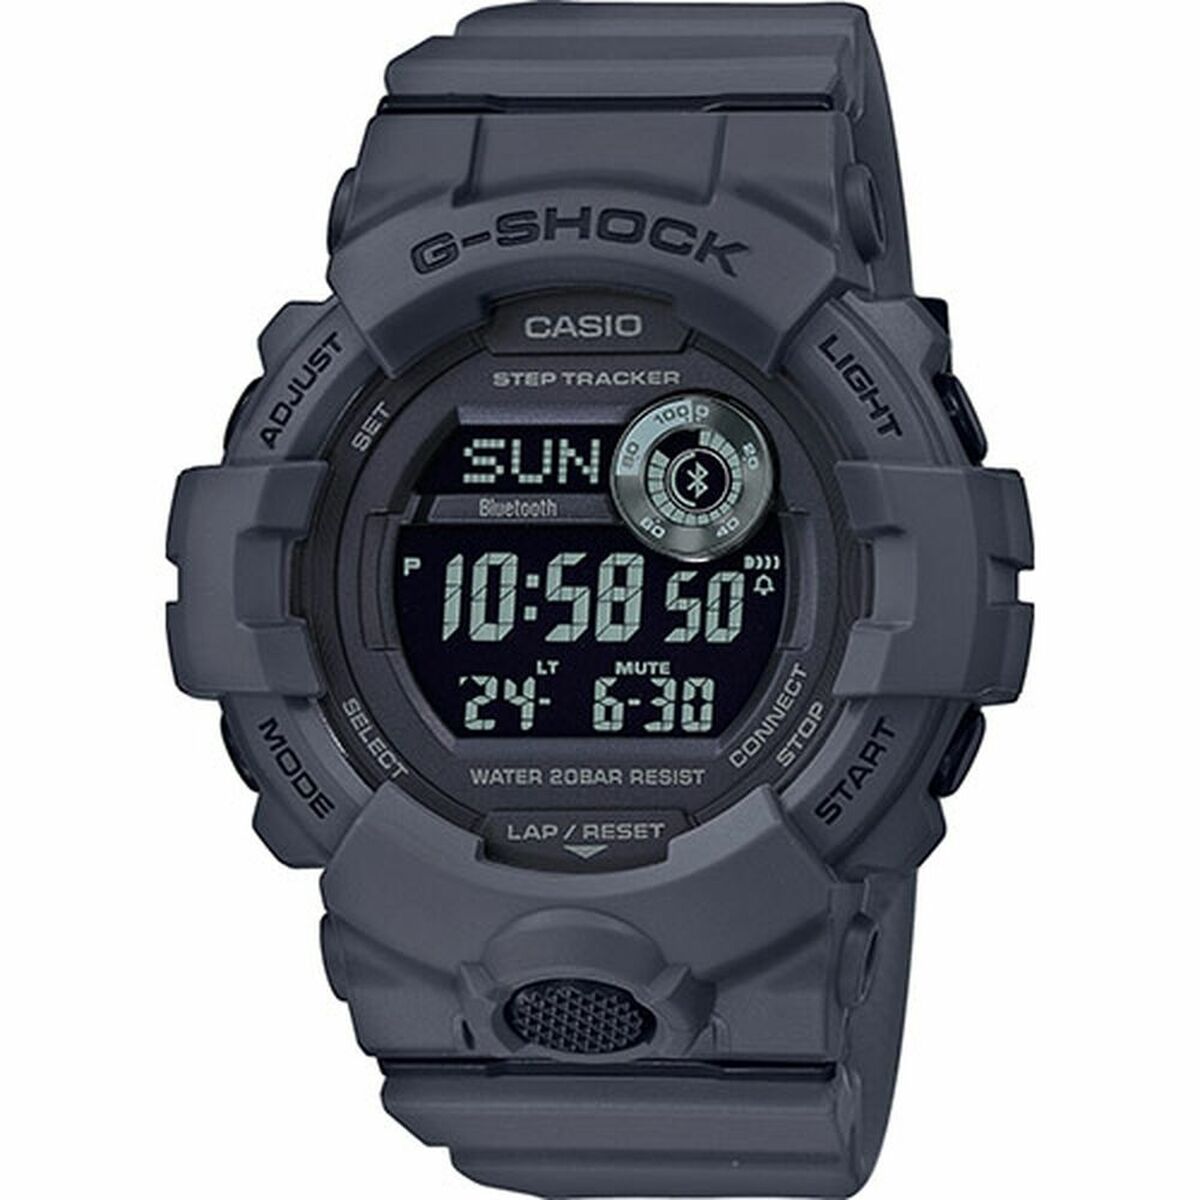 Kaufe Smartwatch Casio G-Shock GBD-800UC-8ER bei AWK Flagship um € 128.00